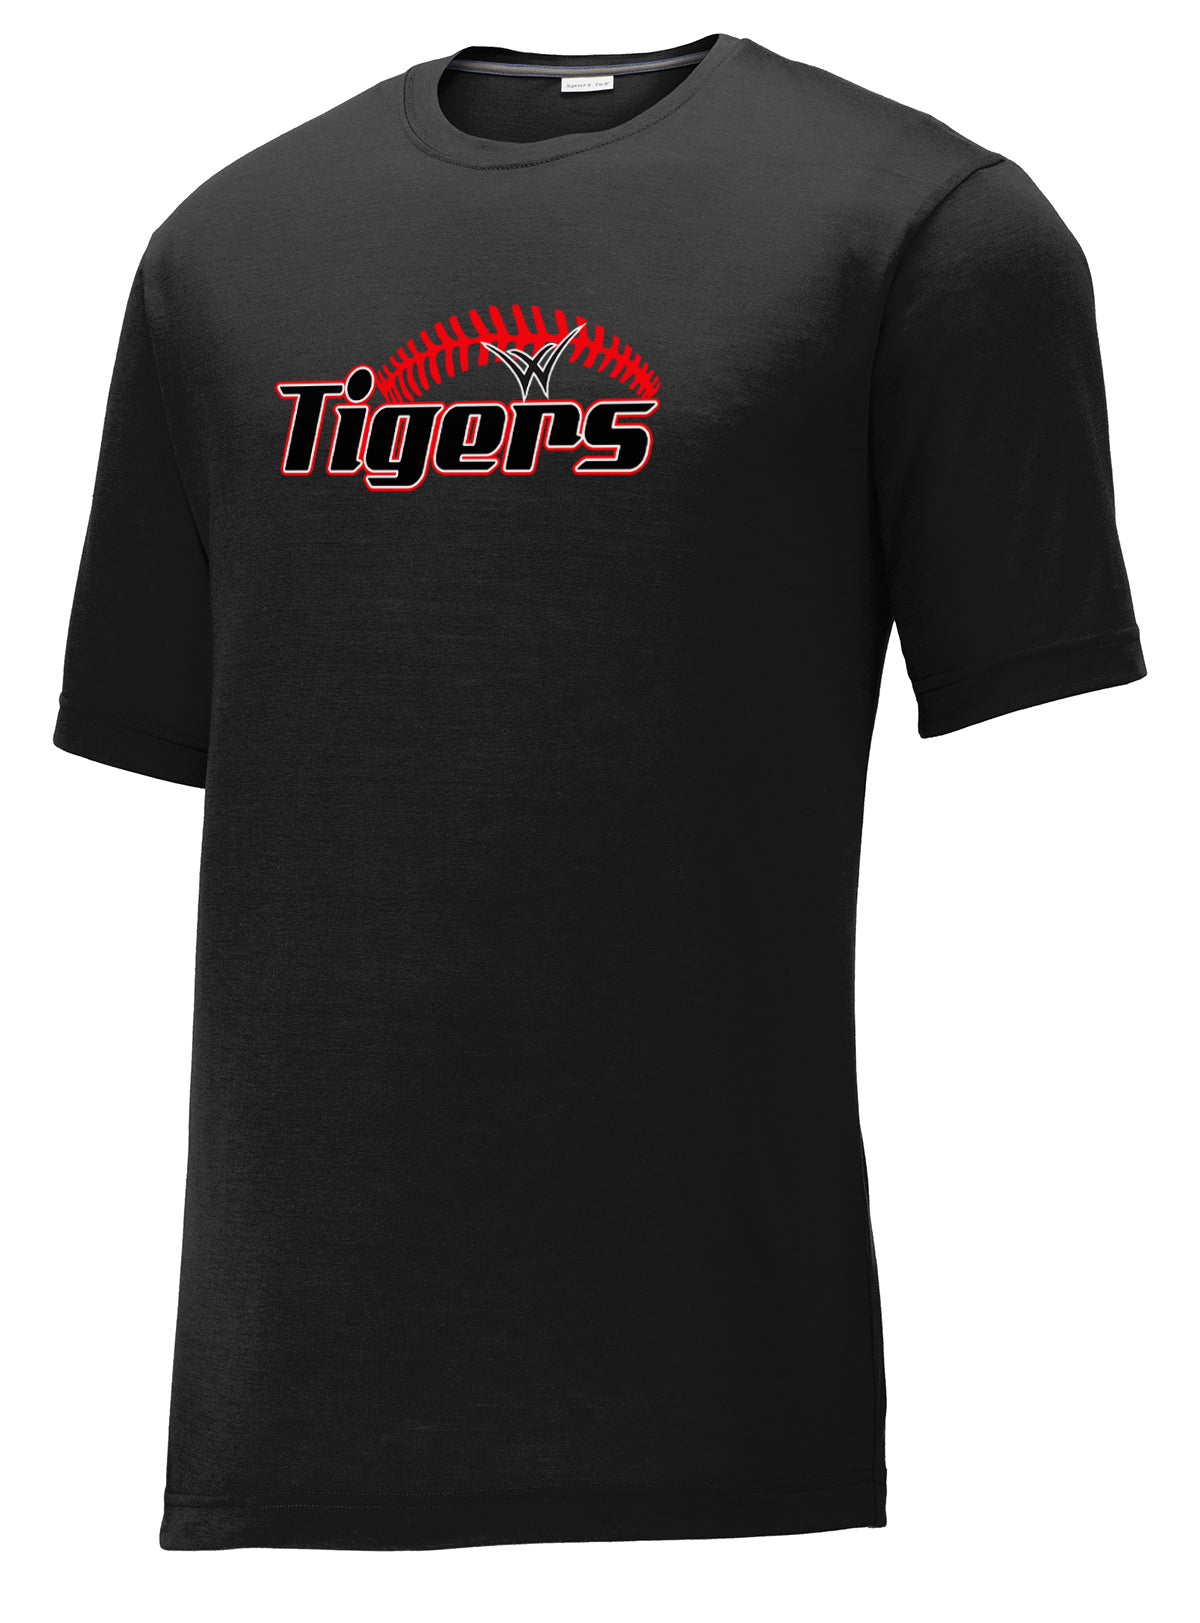 Willard Tigers Baseball CottonTouch Performance T-Shirt